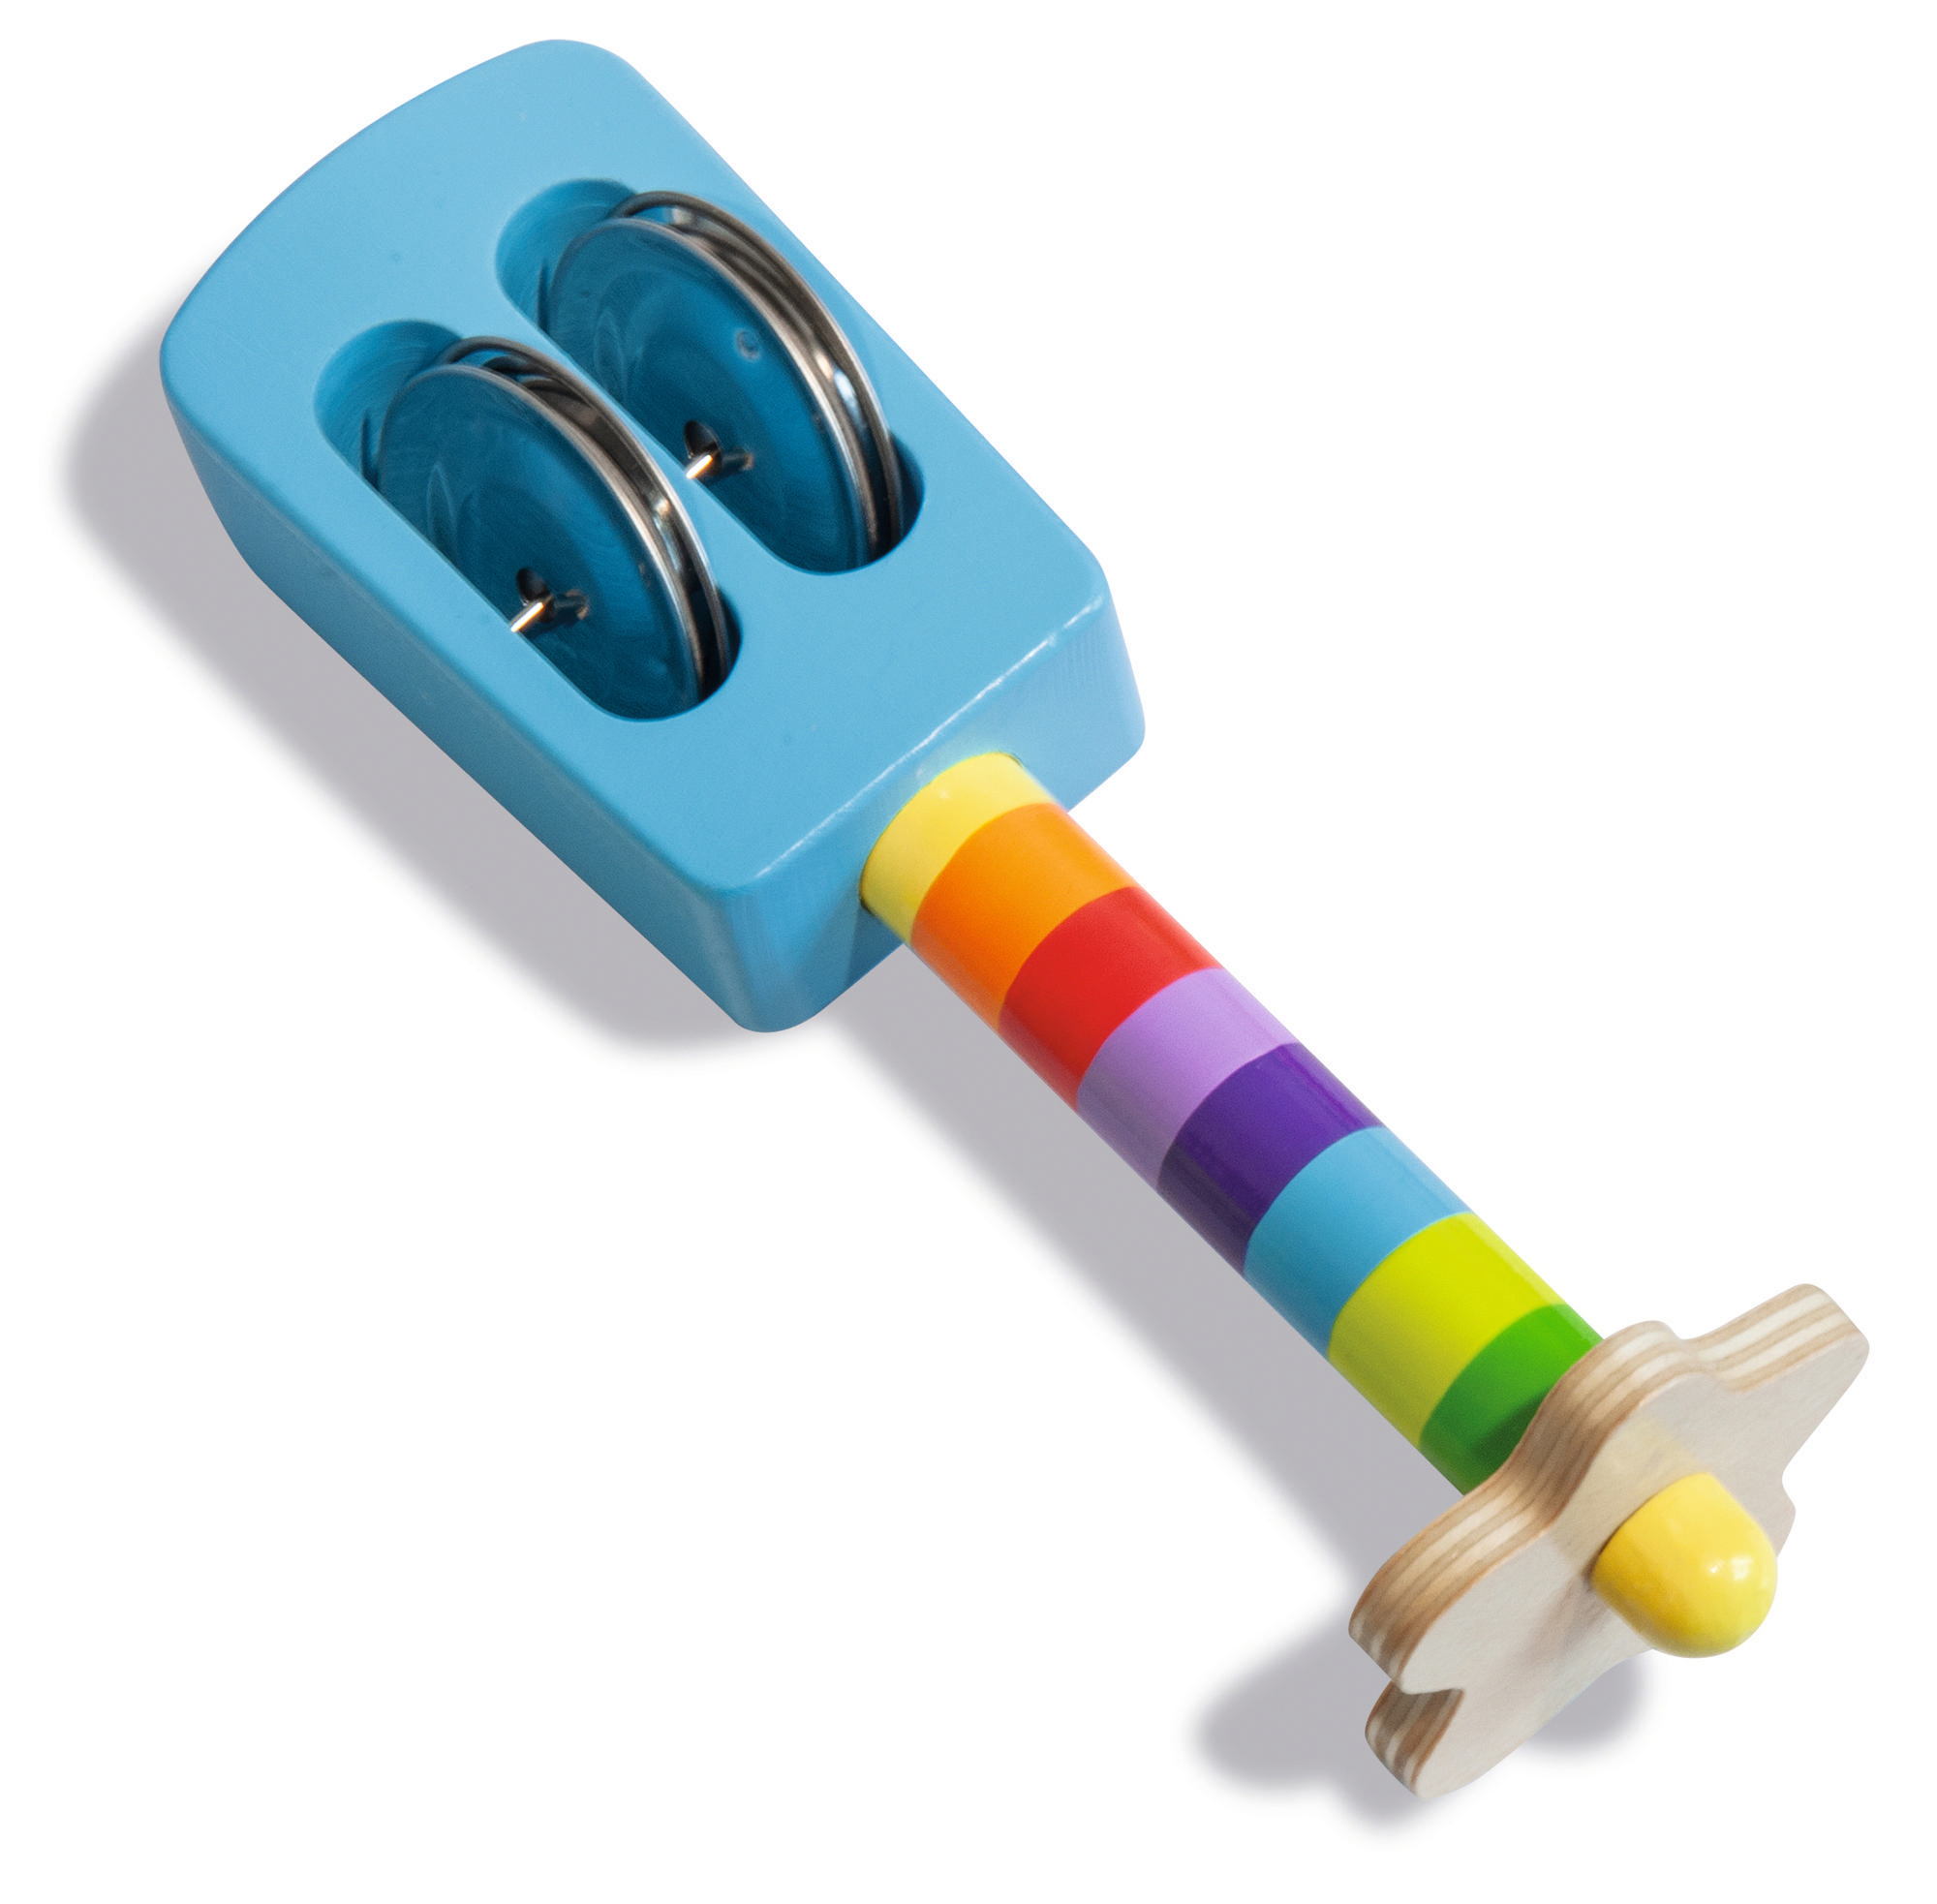 EICHHORN Musik mit Set Mehrfarbig Kinderspielzeug Maracas